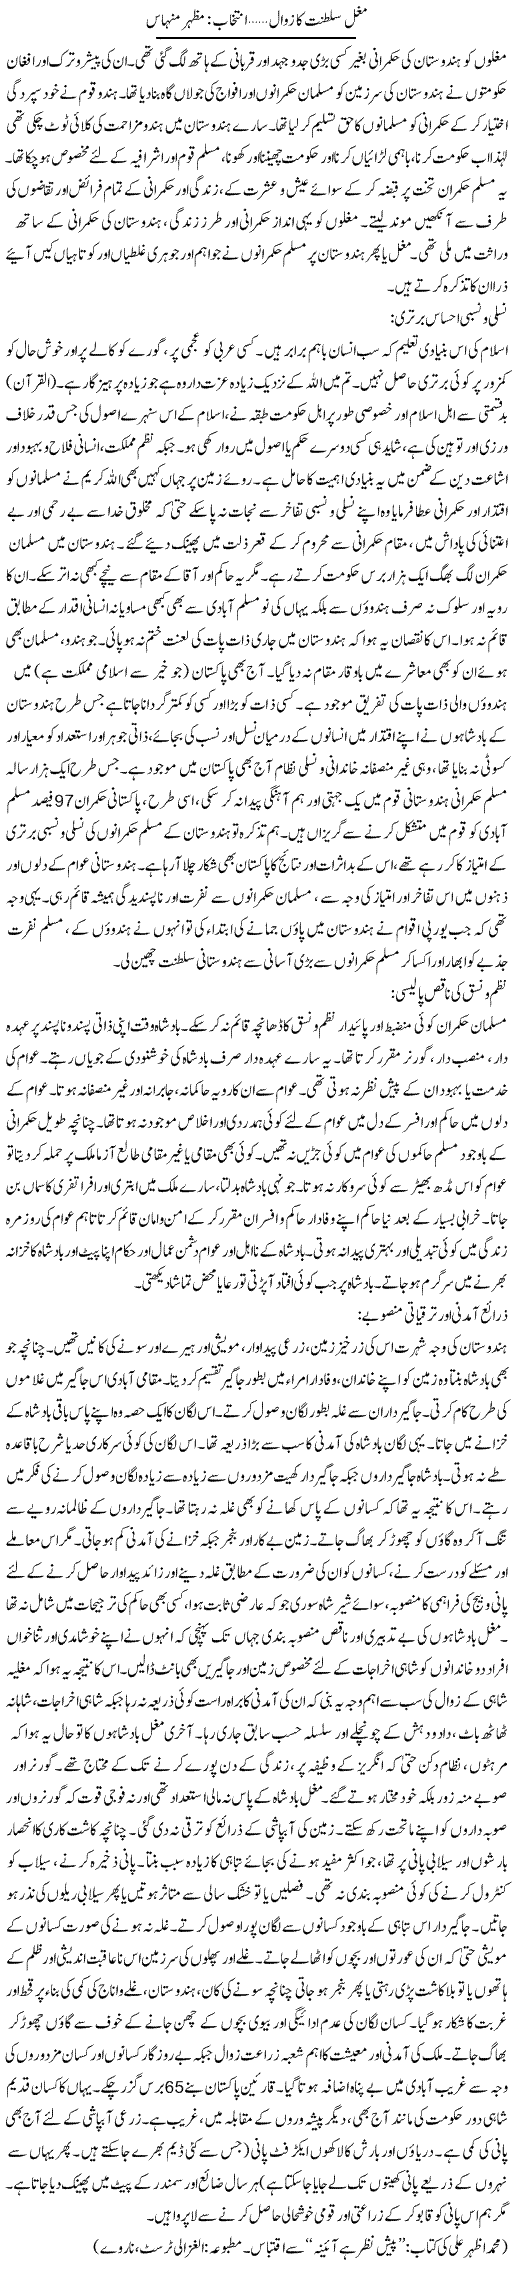 Mughal Sultanate Ka Zawal | Mazhar Minhas | Daily Urdu Columns